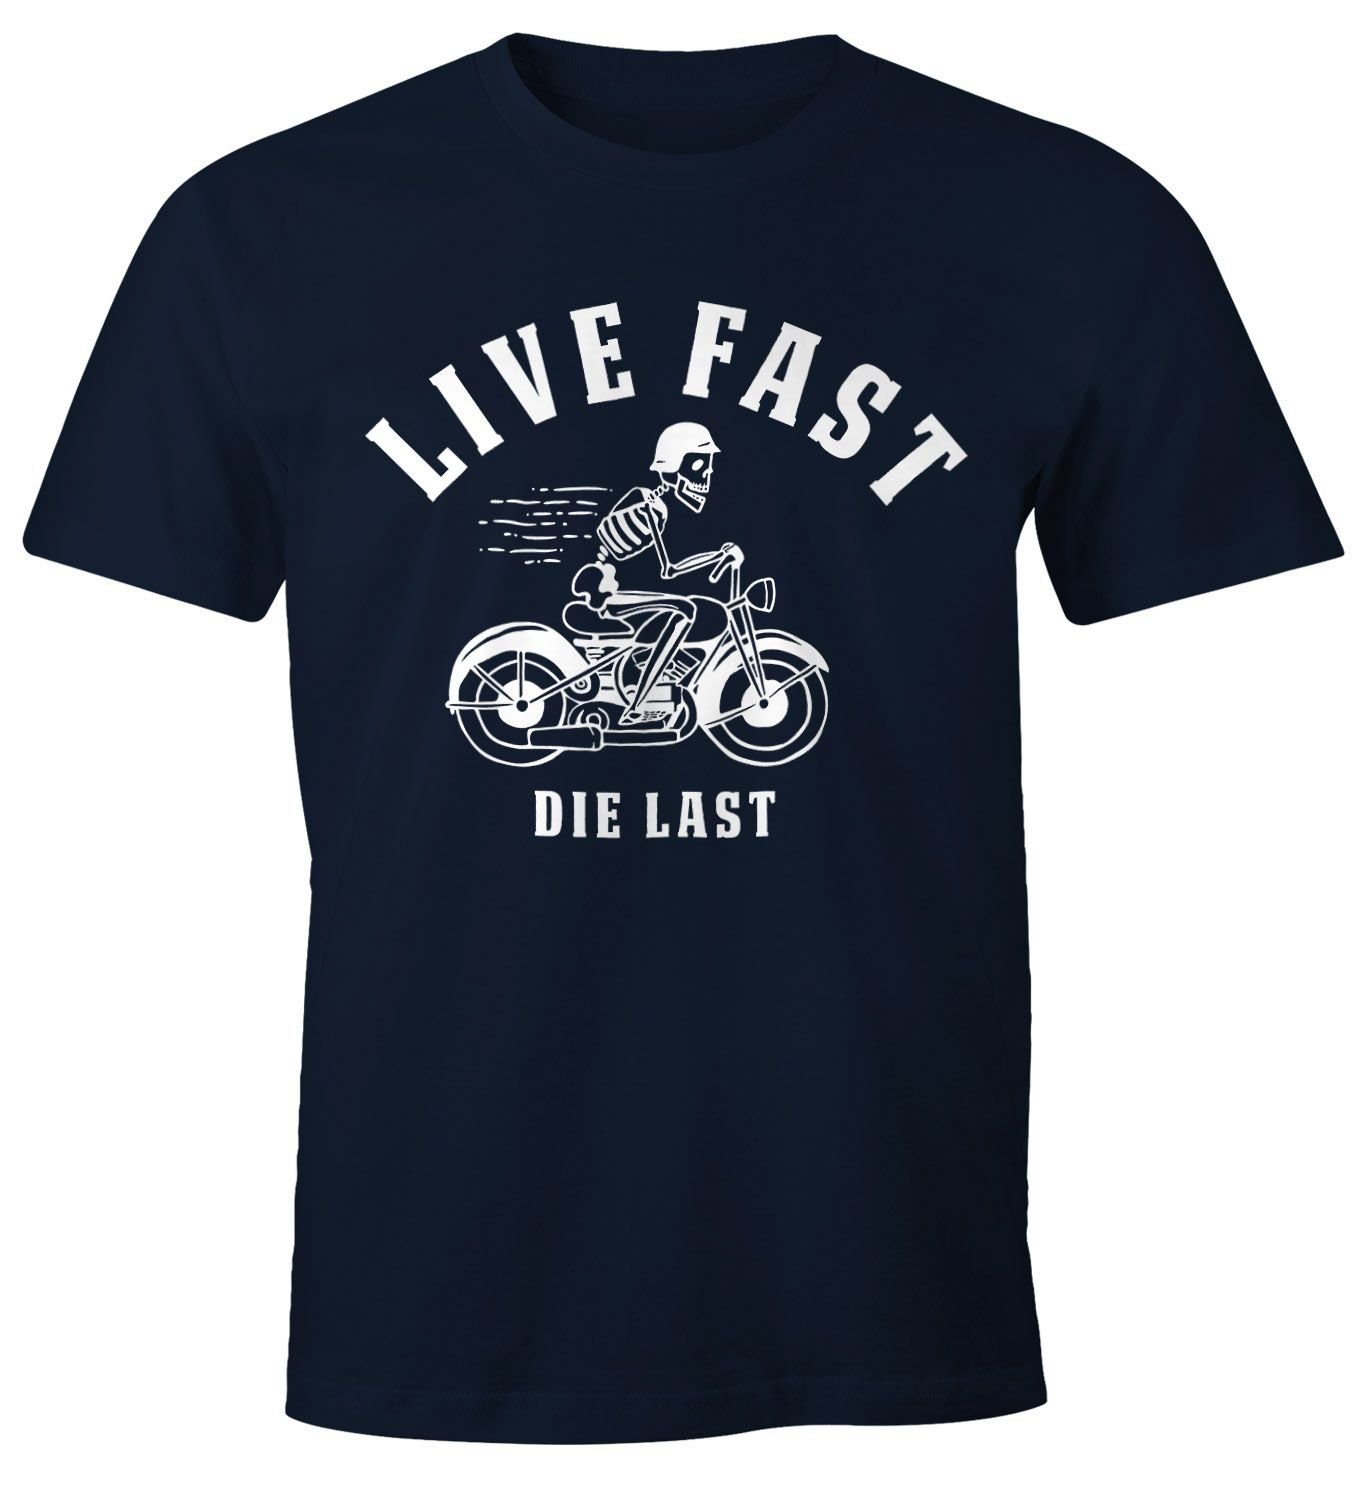 MoonWorks Spruch Moonworks® Fun-Shirt last navy T-Shirt mit Live Fast Print Herren Die Print-Shirt Fun